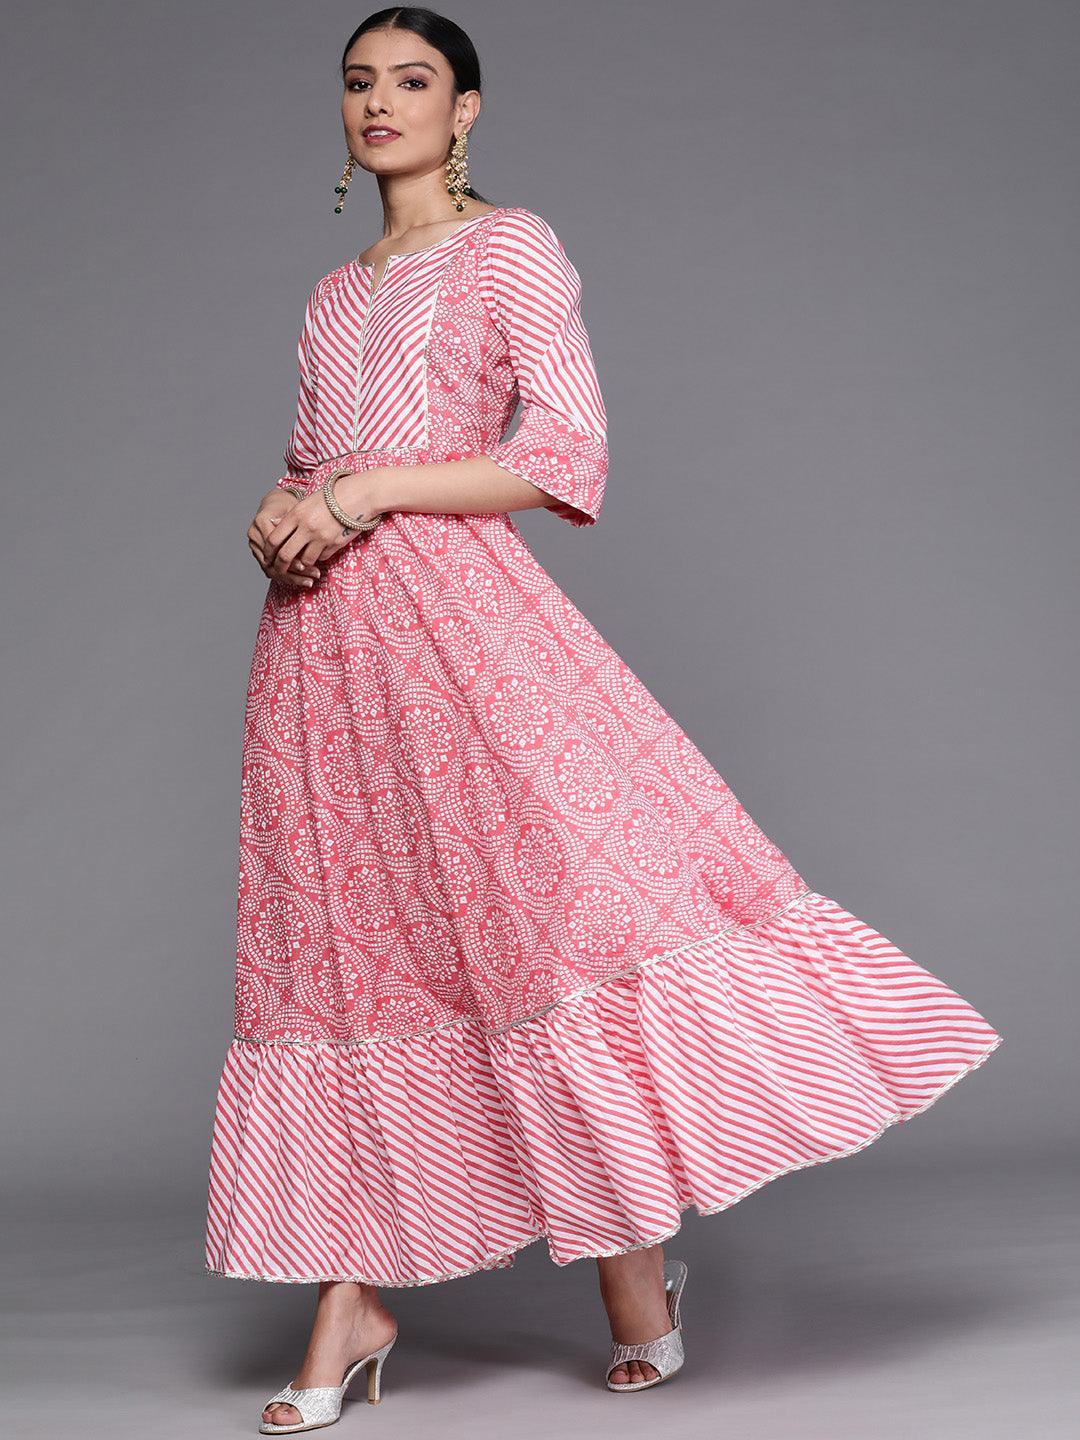 Pink Printed Cotton Dress - ShopLibas